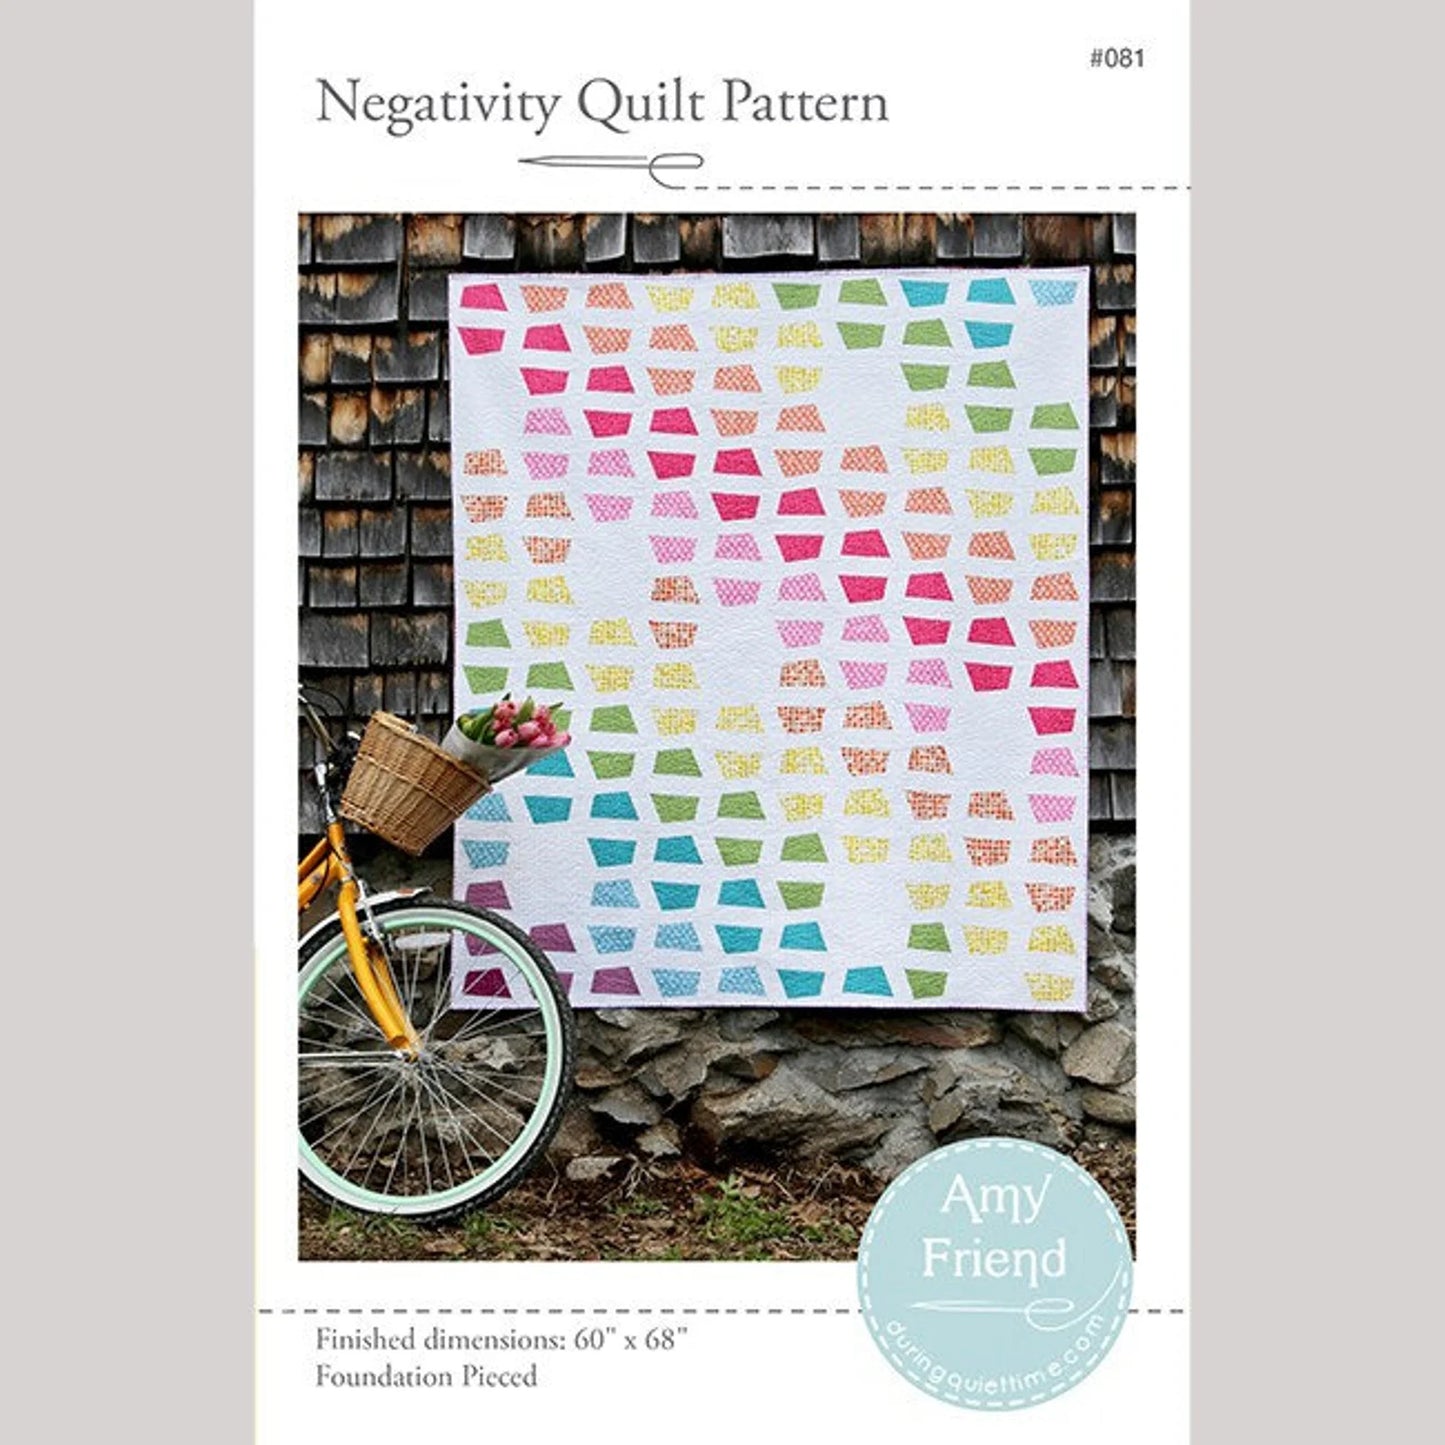 Negative Quilt Pattern by Amy Friend